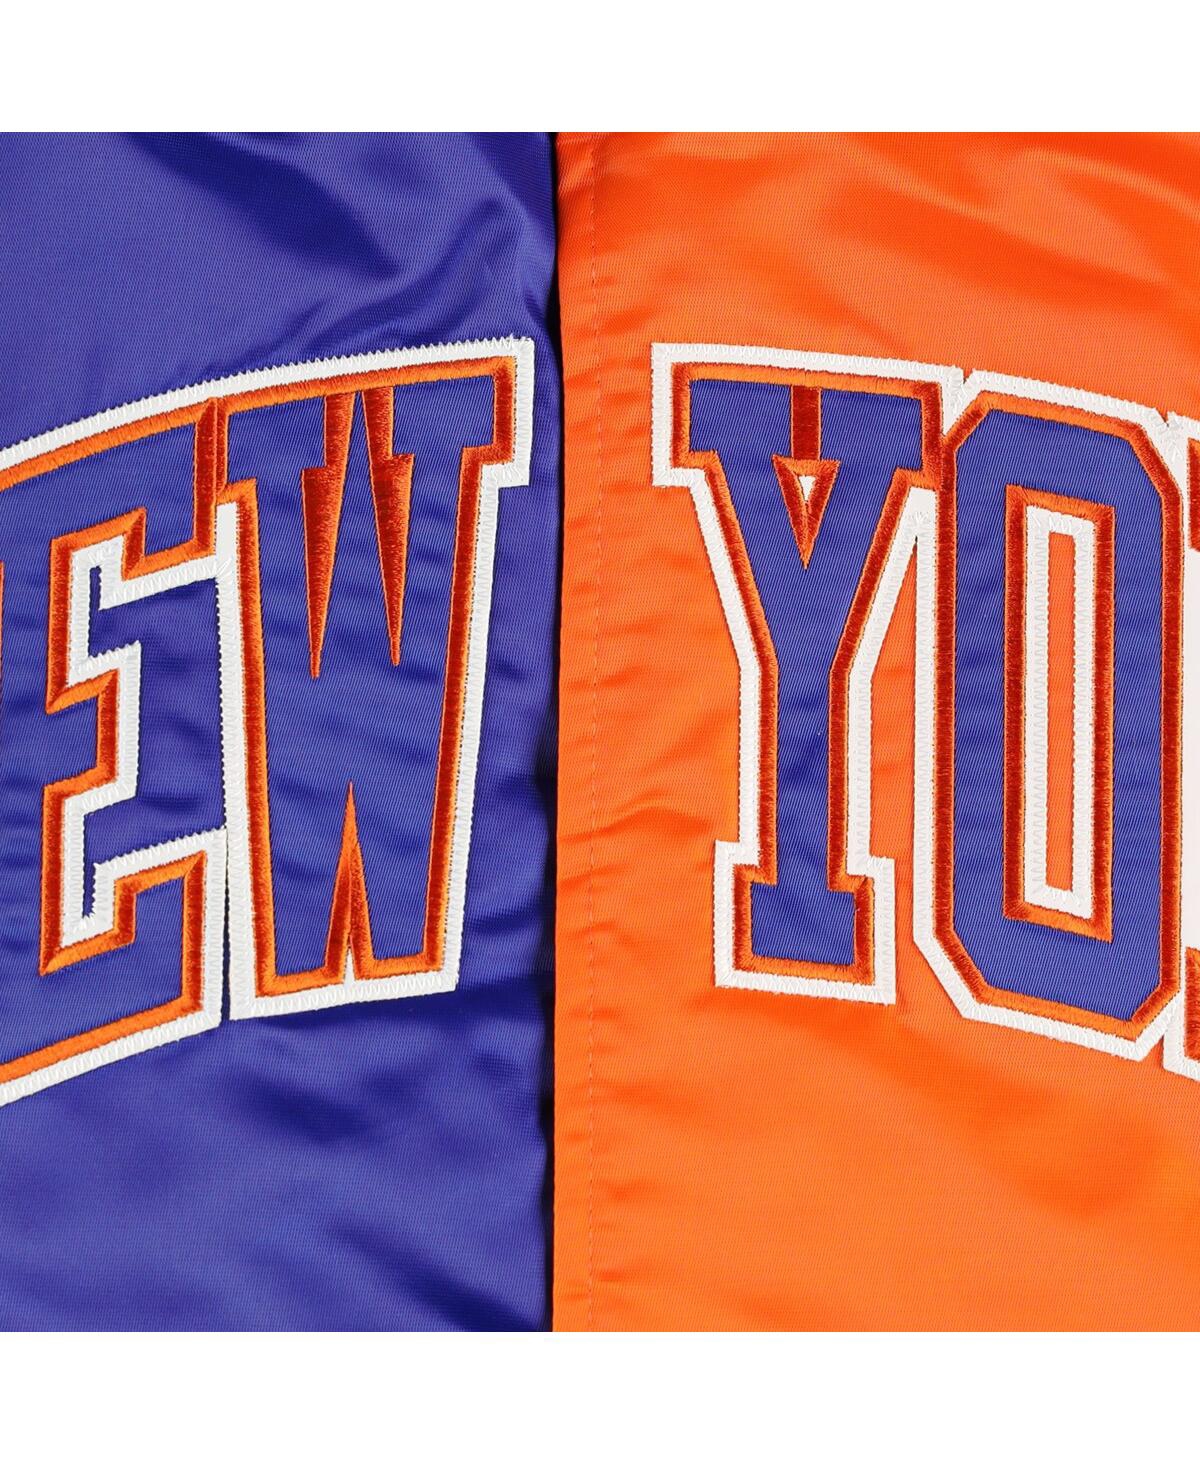 Shop Starter Men's  Blue, Orange New York Knicks Fast Break Satin Full-snap Jacket In Blue,orange